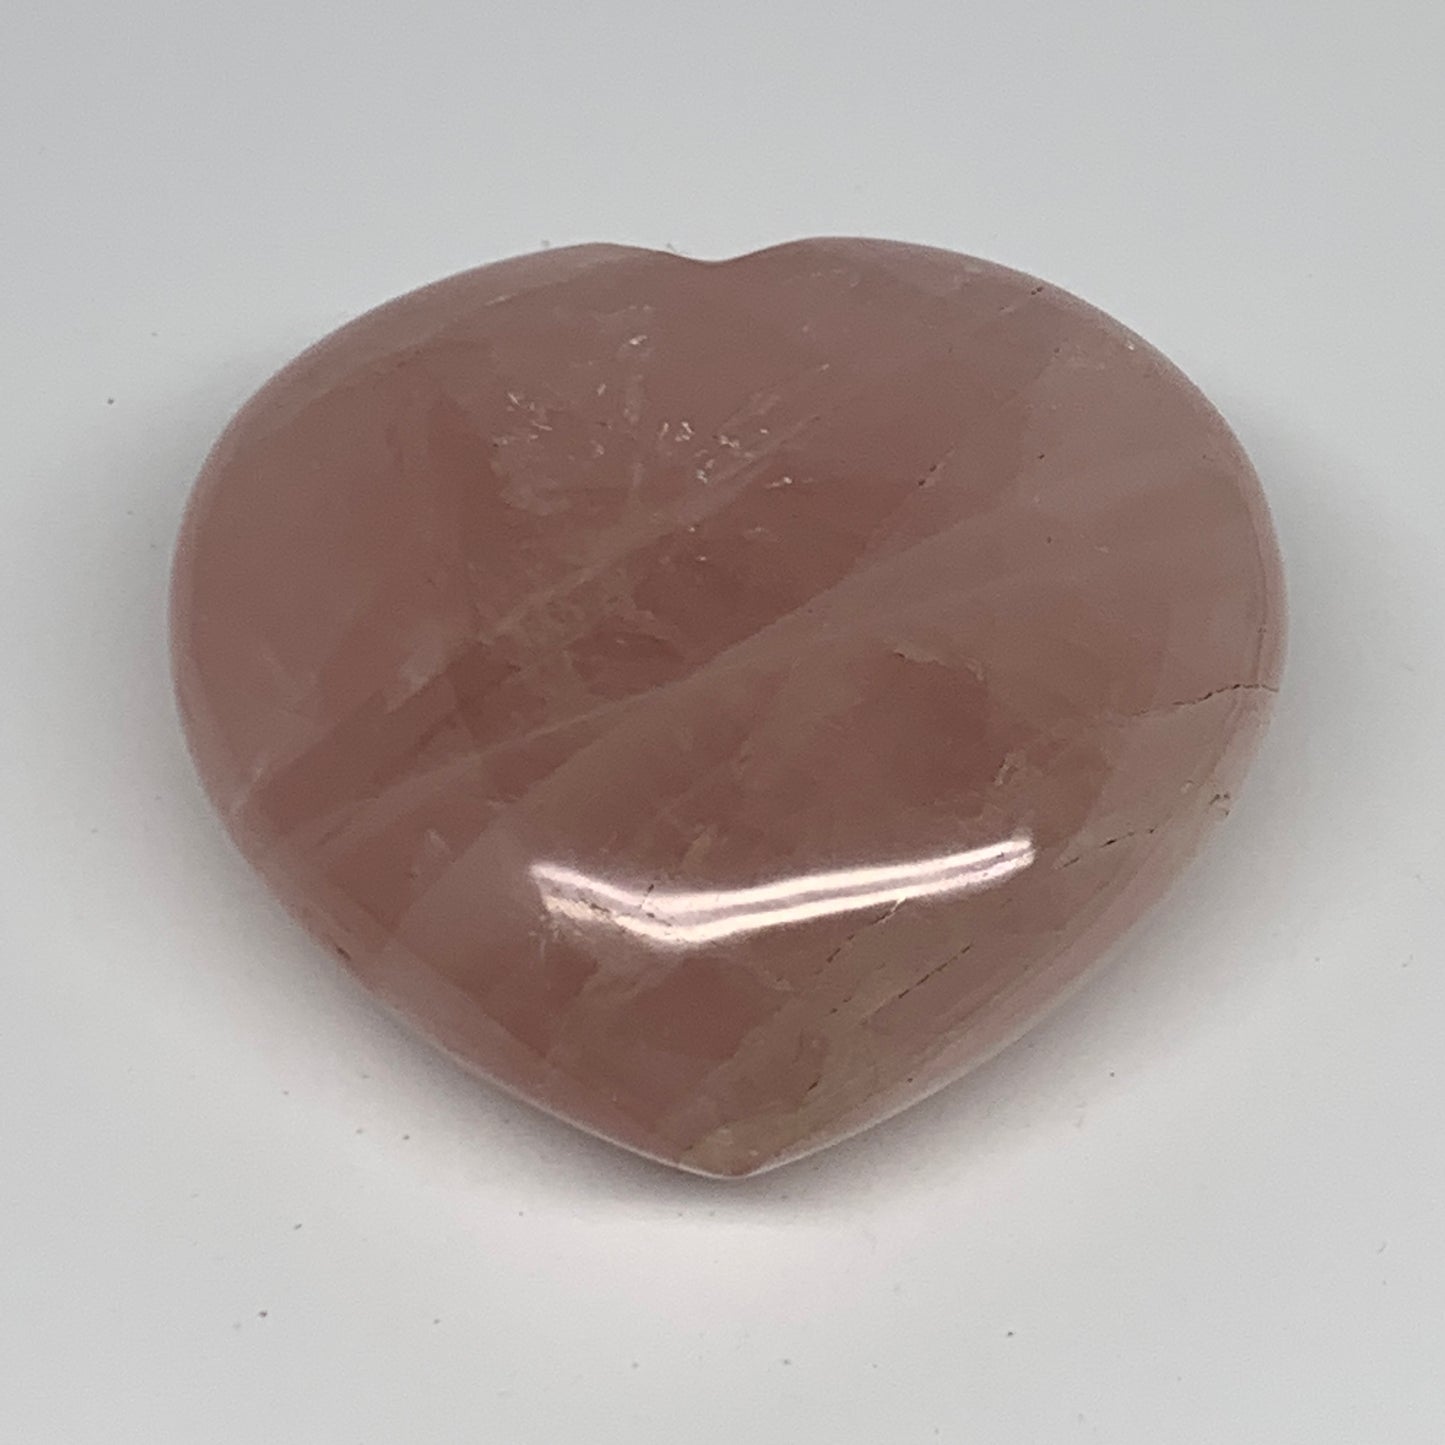 316.1g, 3.1" x 3.3" x 1.4" Rose Quartz Heart Healing Crystal @Madagascar, B17399